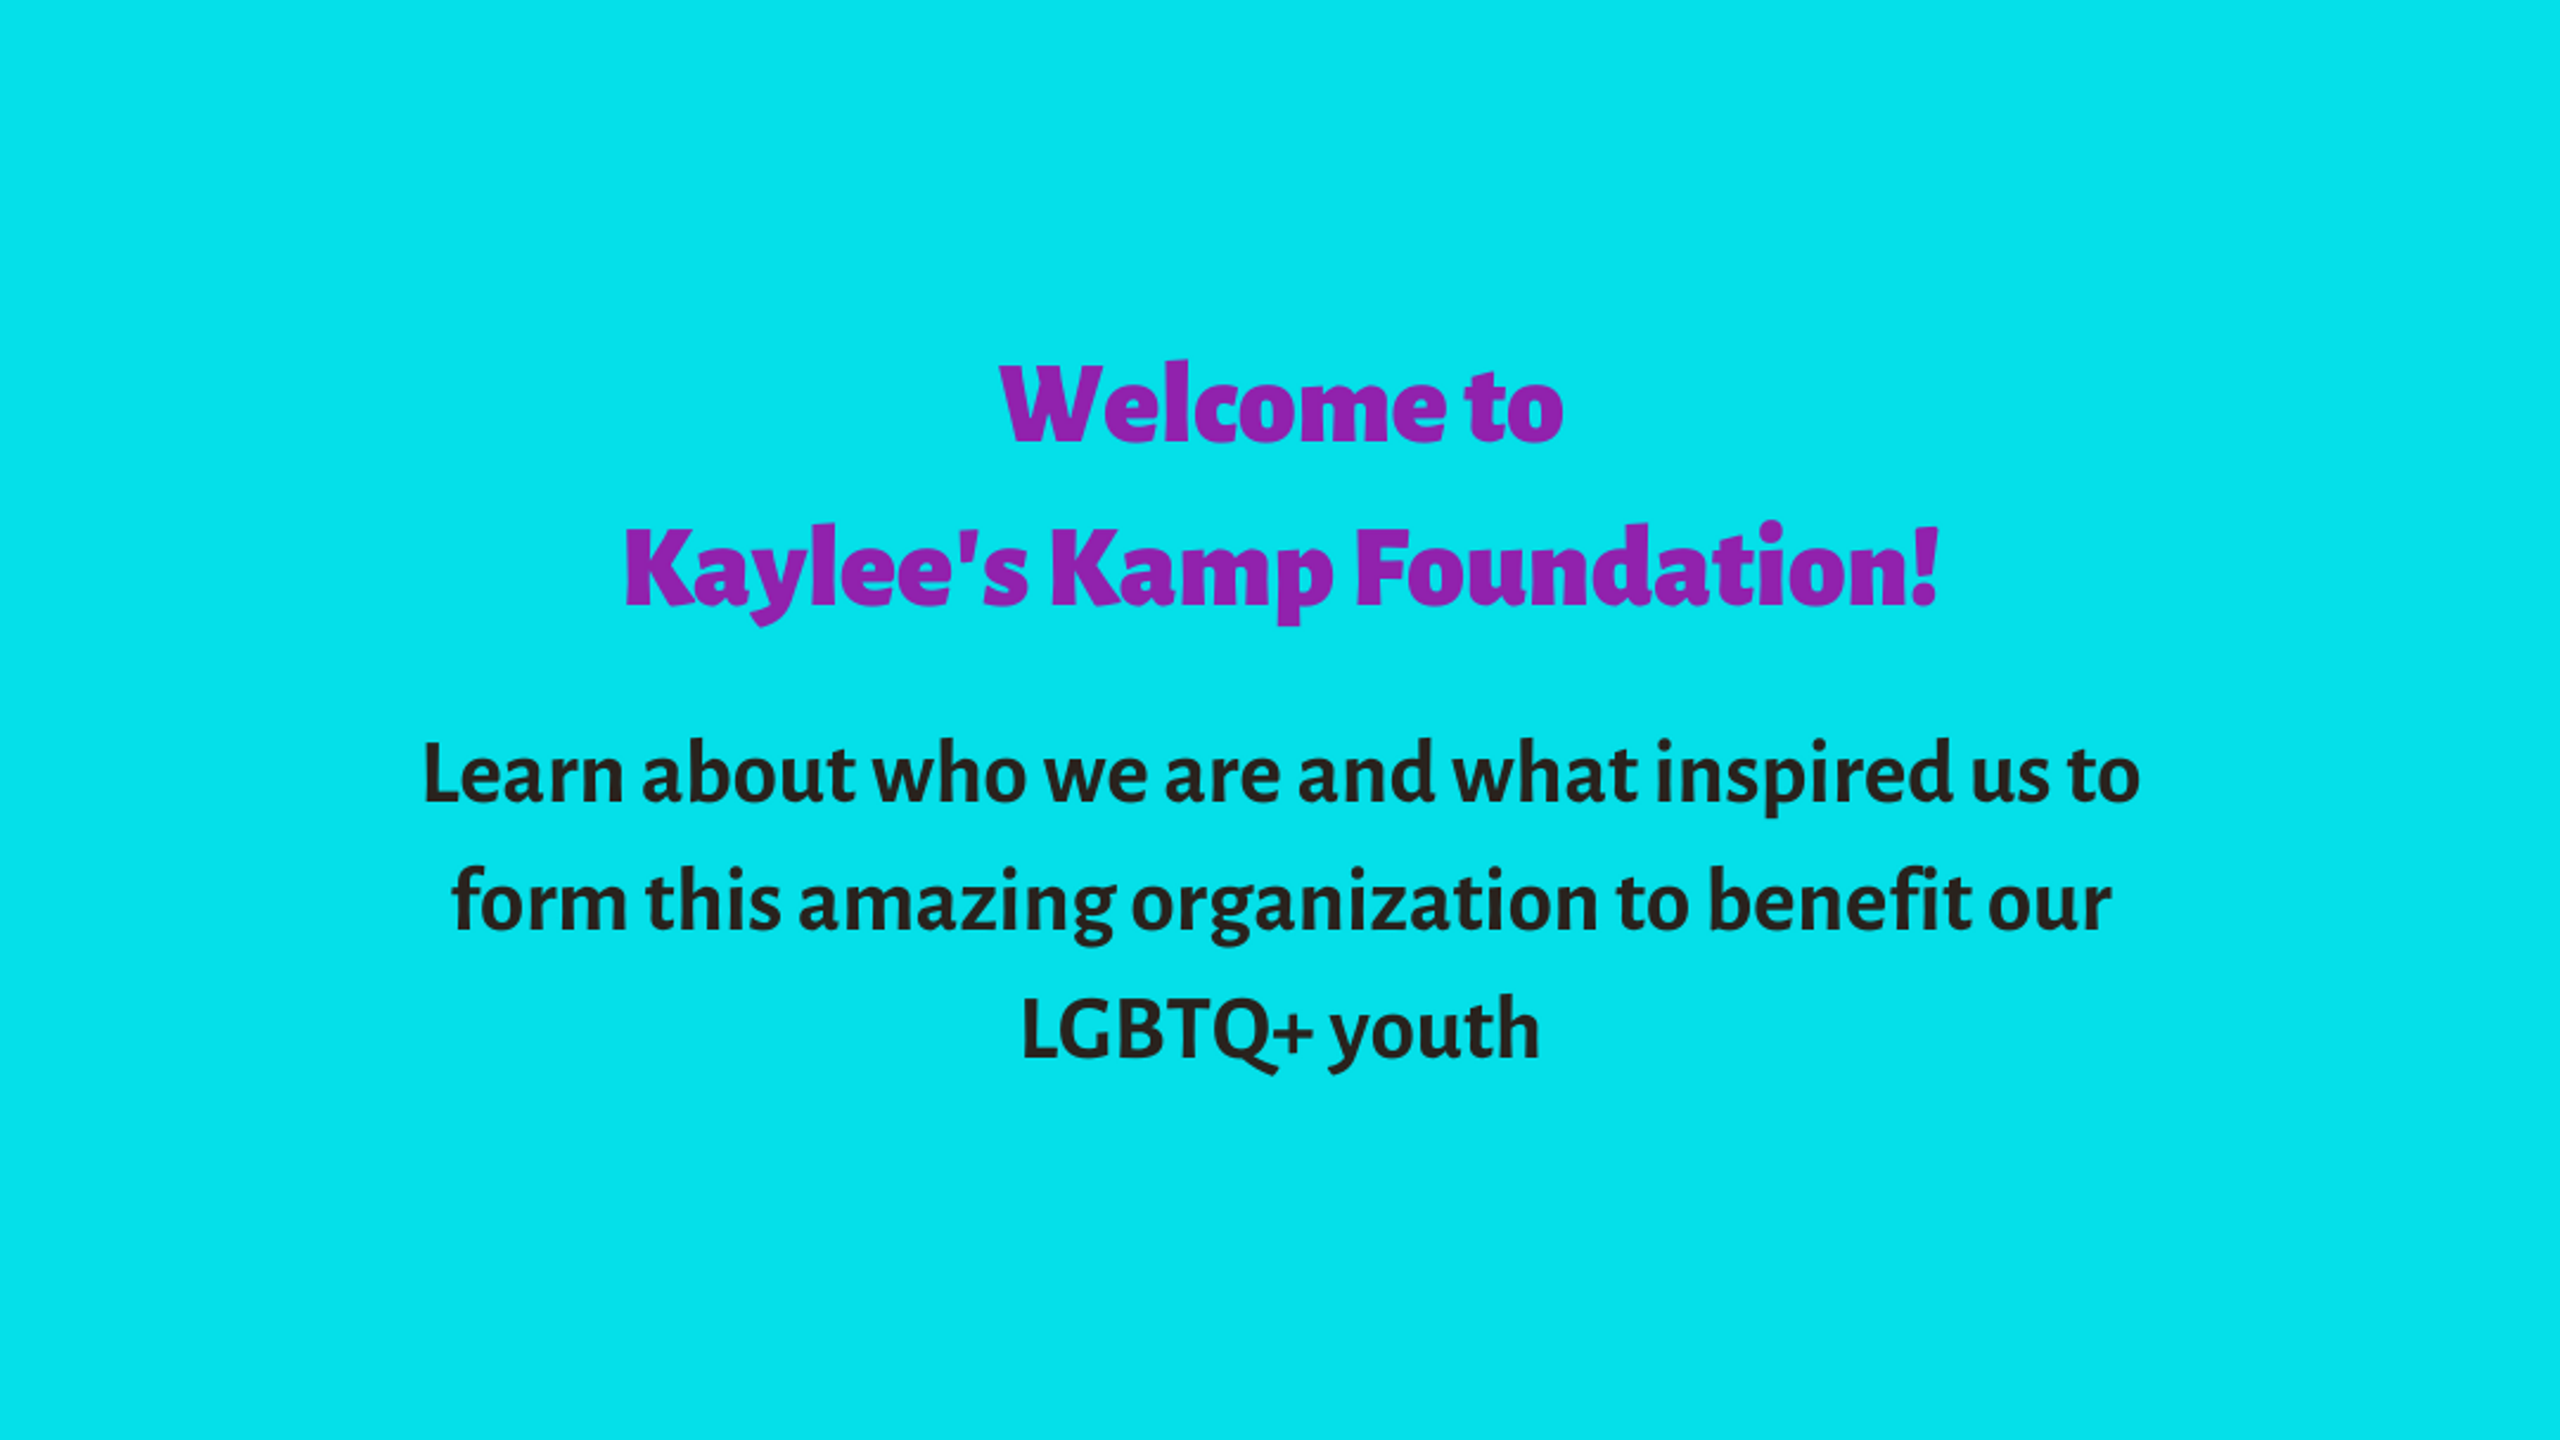 Welcome to Kaylee's Kamp Foundation